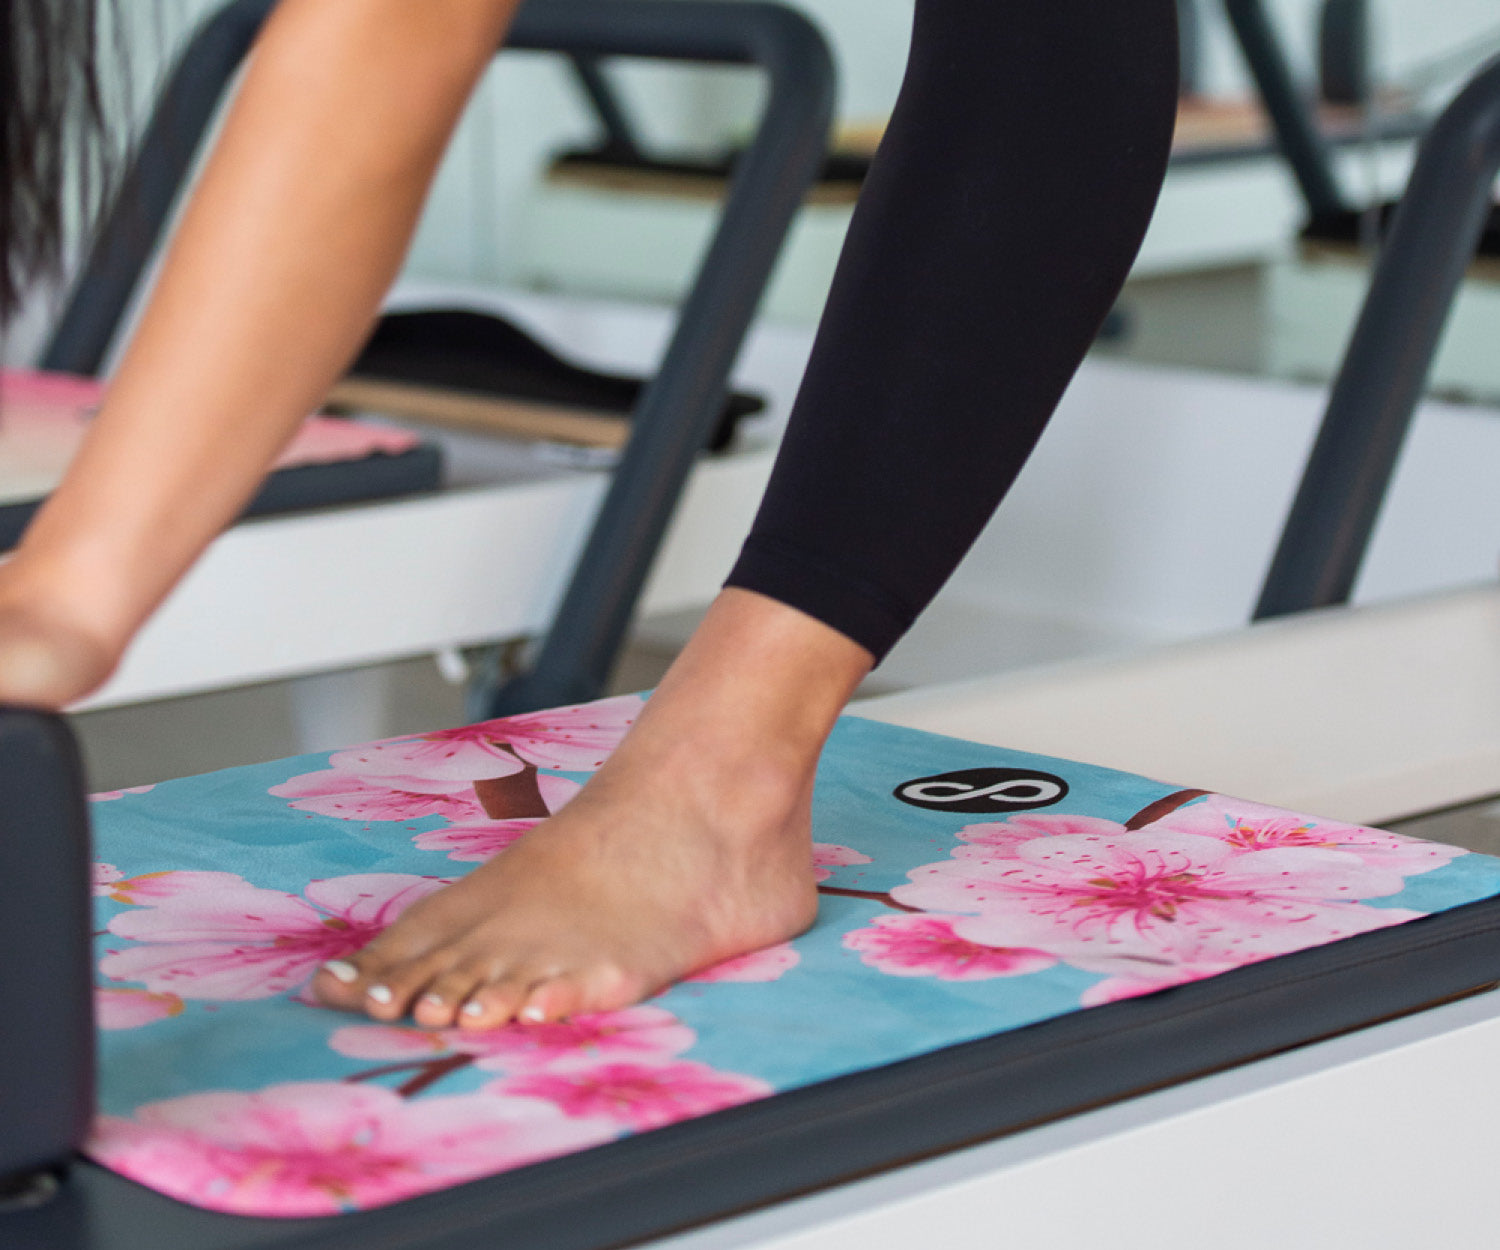 REFORMERMAT Pilates Reformer Durable Micro-fibre Gym Mat - Pink Cherry Blossom Design